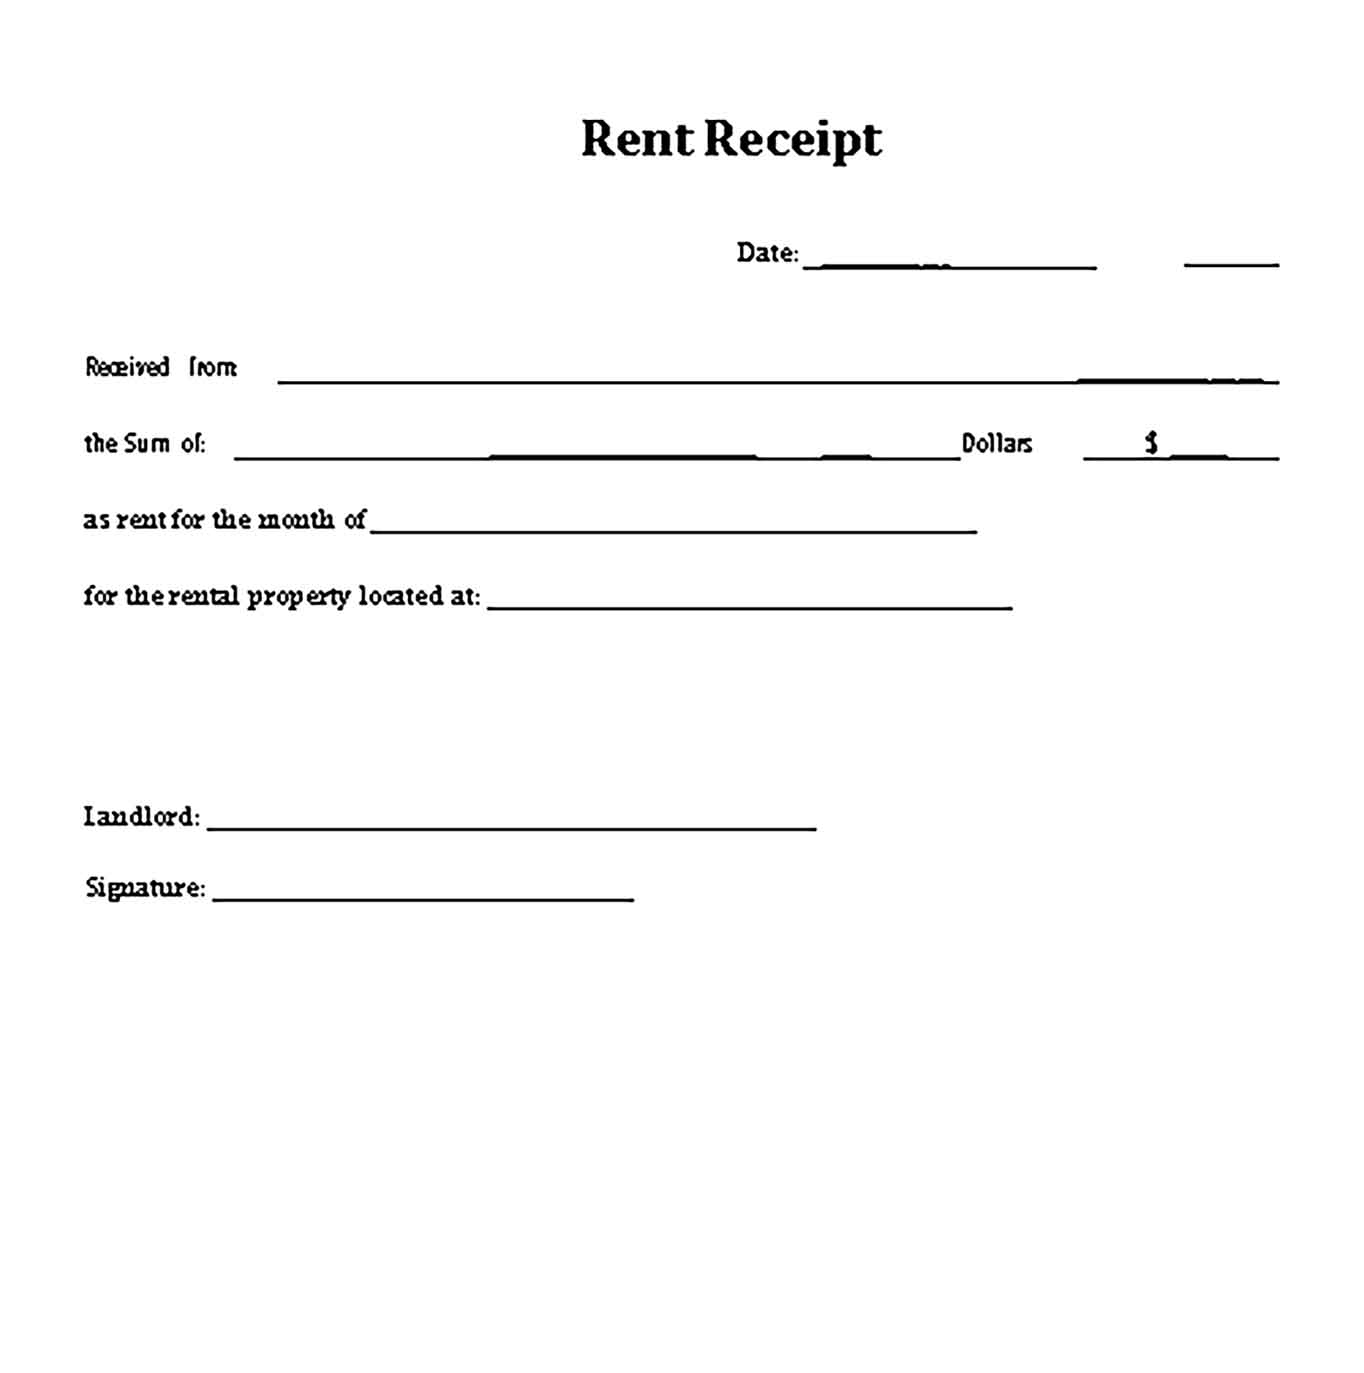 Sample Rental Property Rental Receipt Templates